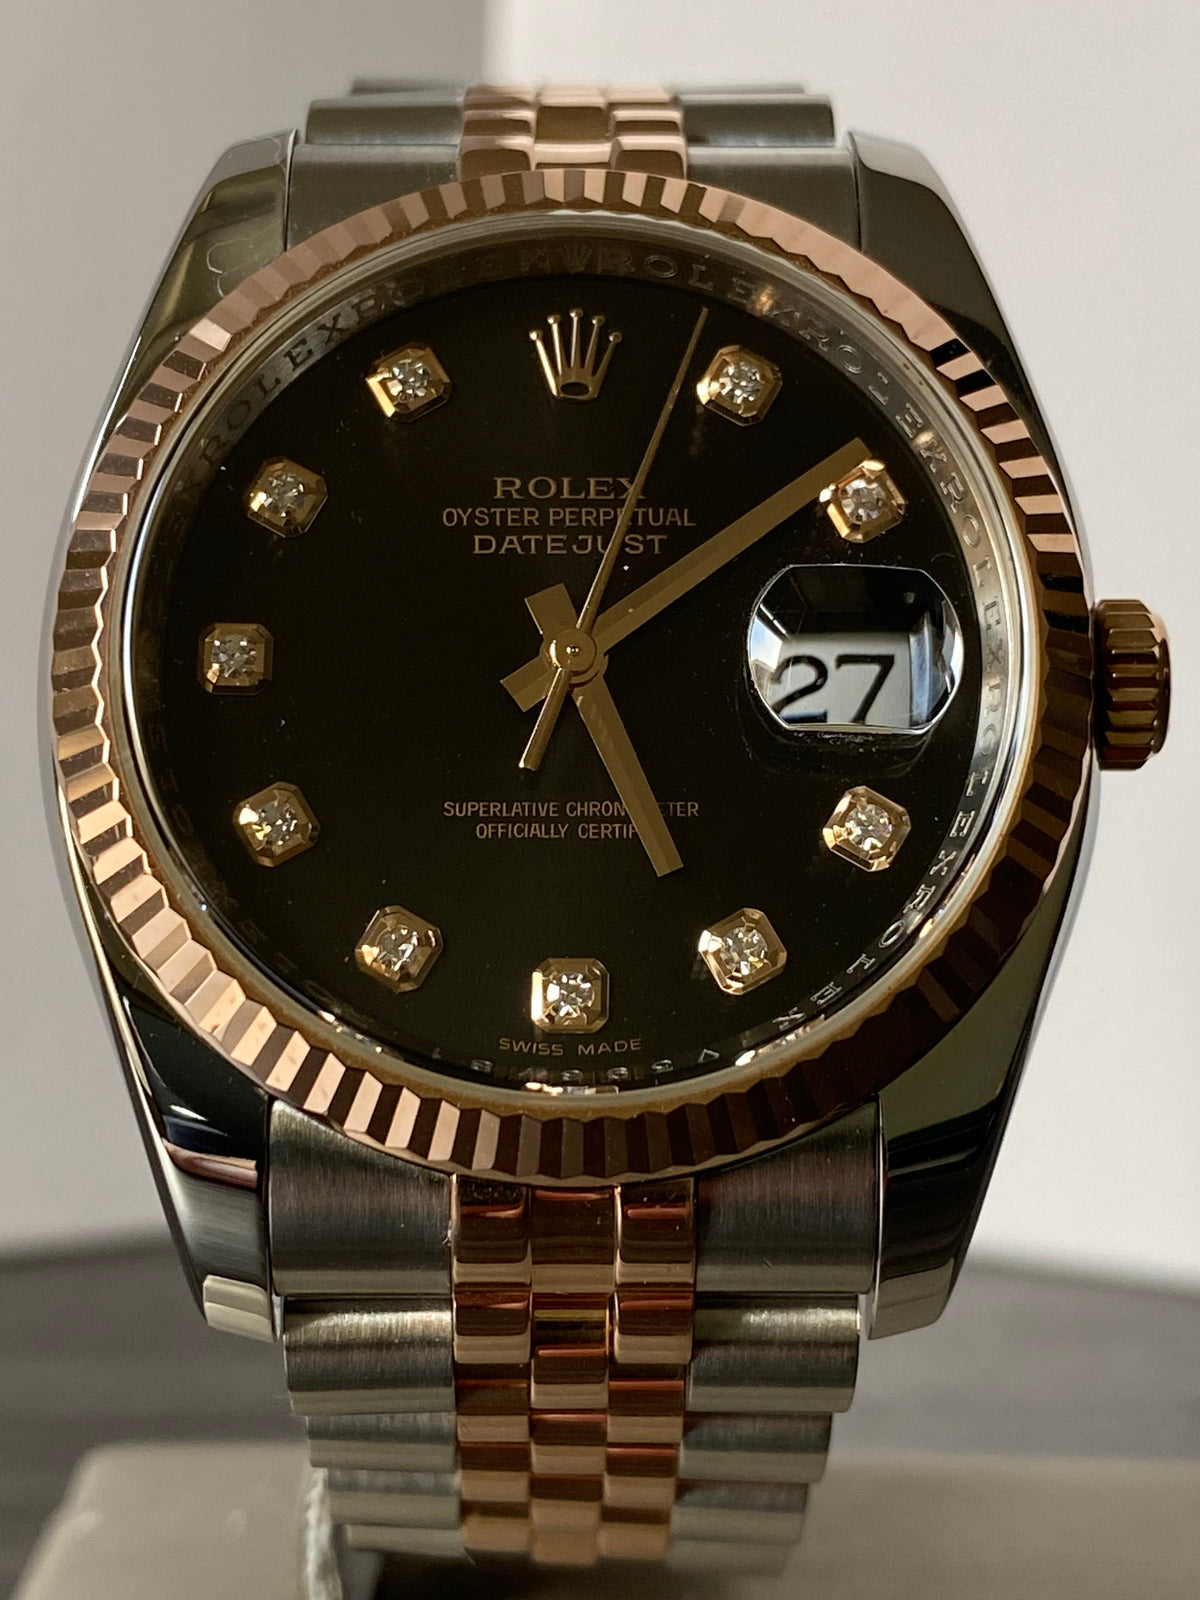 Rolex Steel and Everose Gold Datejust 36 - 2009 - Fluted Bezel - Black Diamond Dial - Jubilee Bracelet - 116231